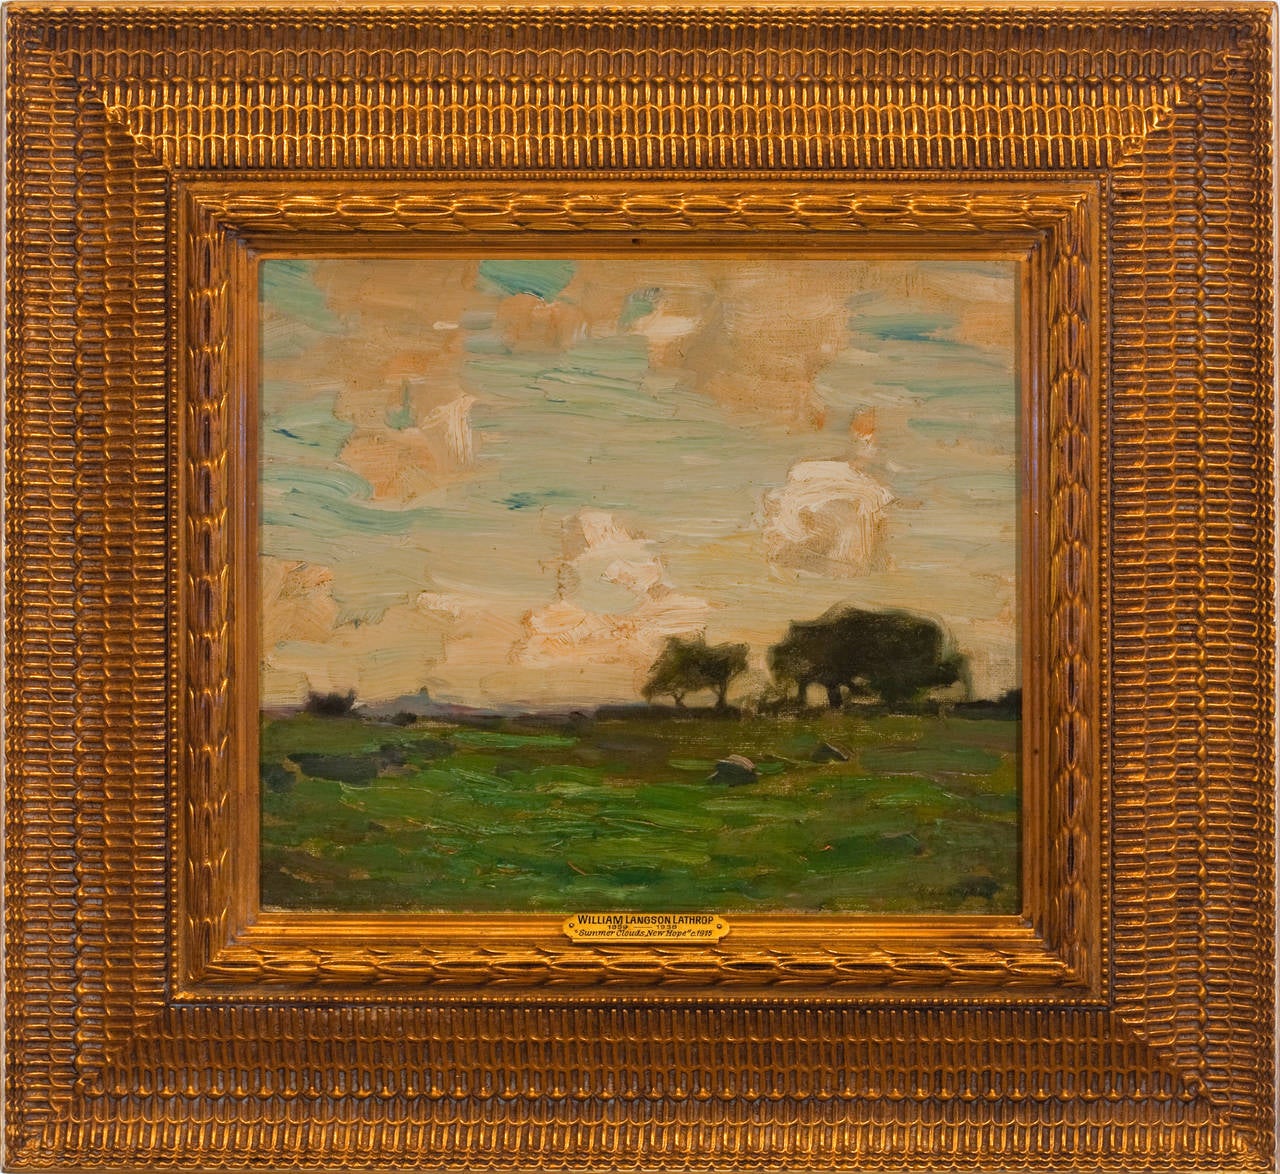 William Langson Lathrop Landscape Painting - "Summer Clouds"